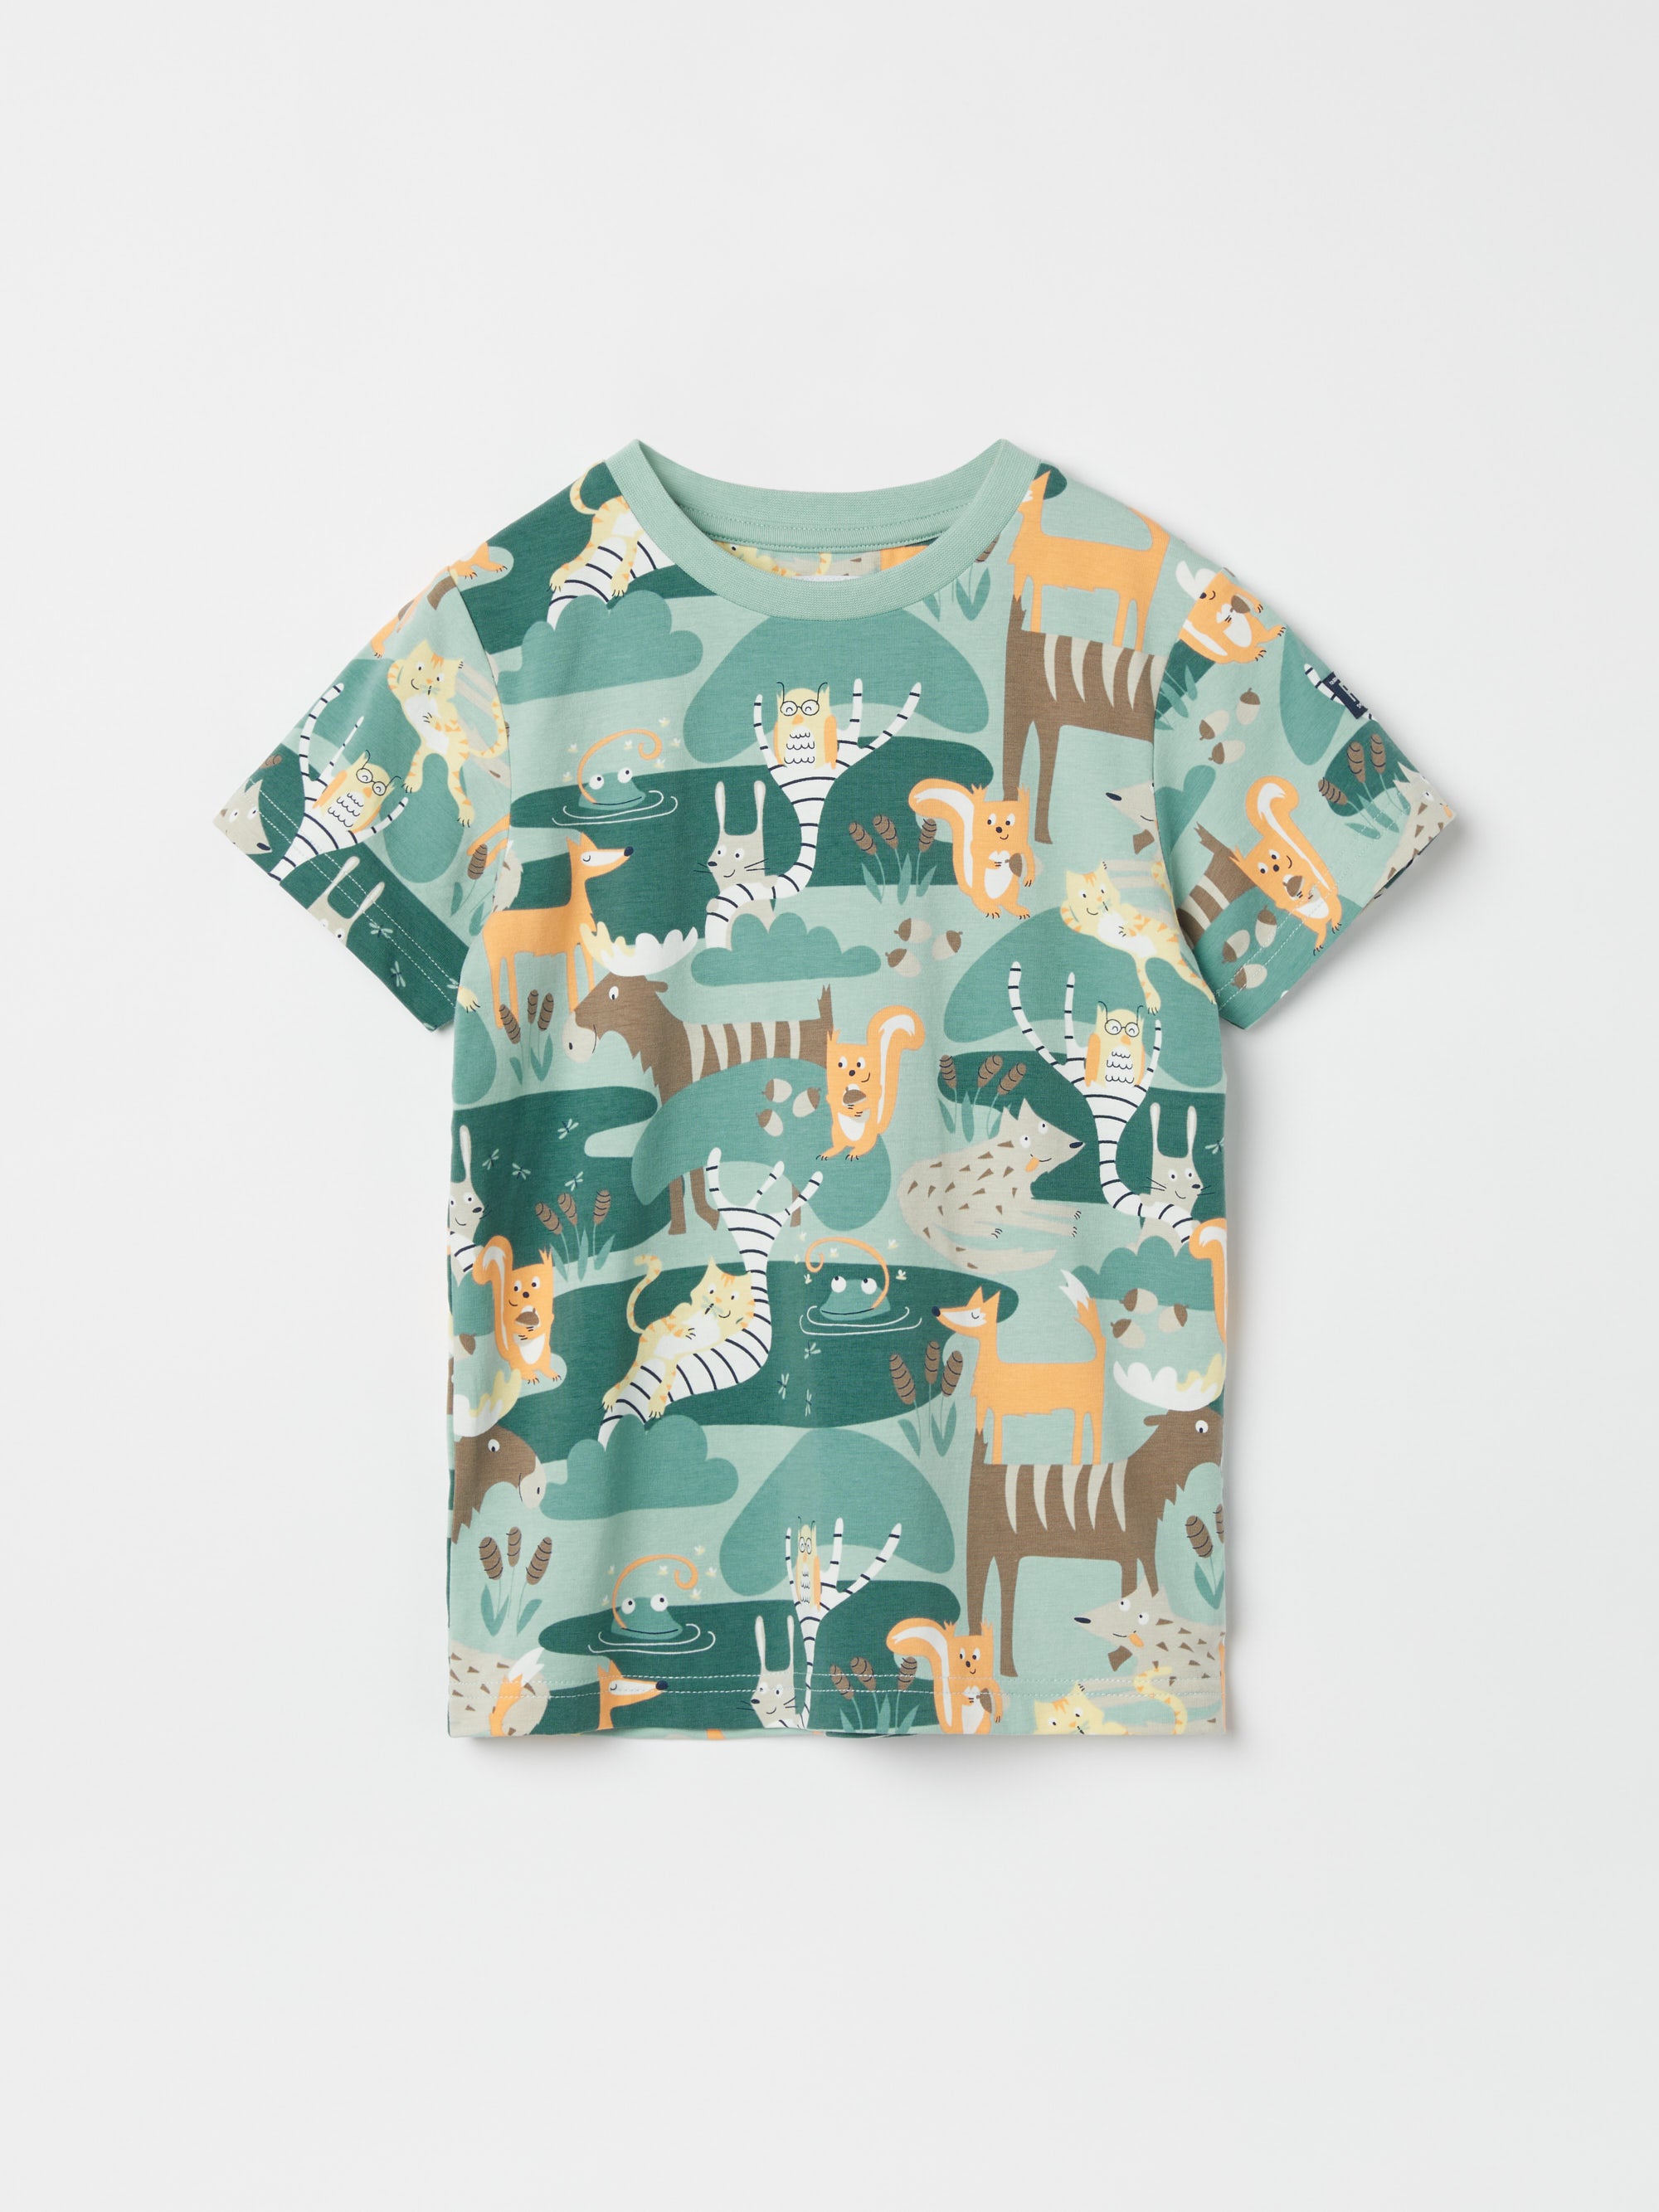 Forest Animal Print Kids T-Shirt